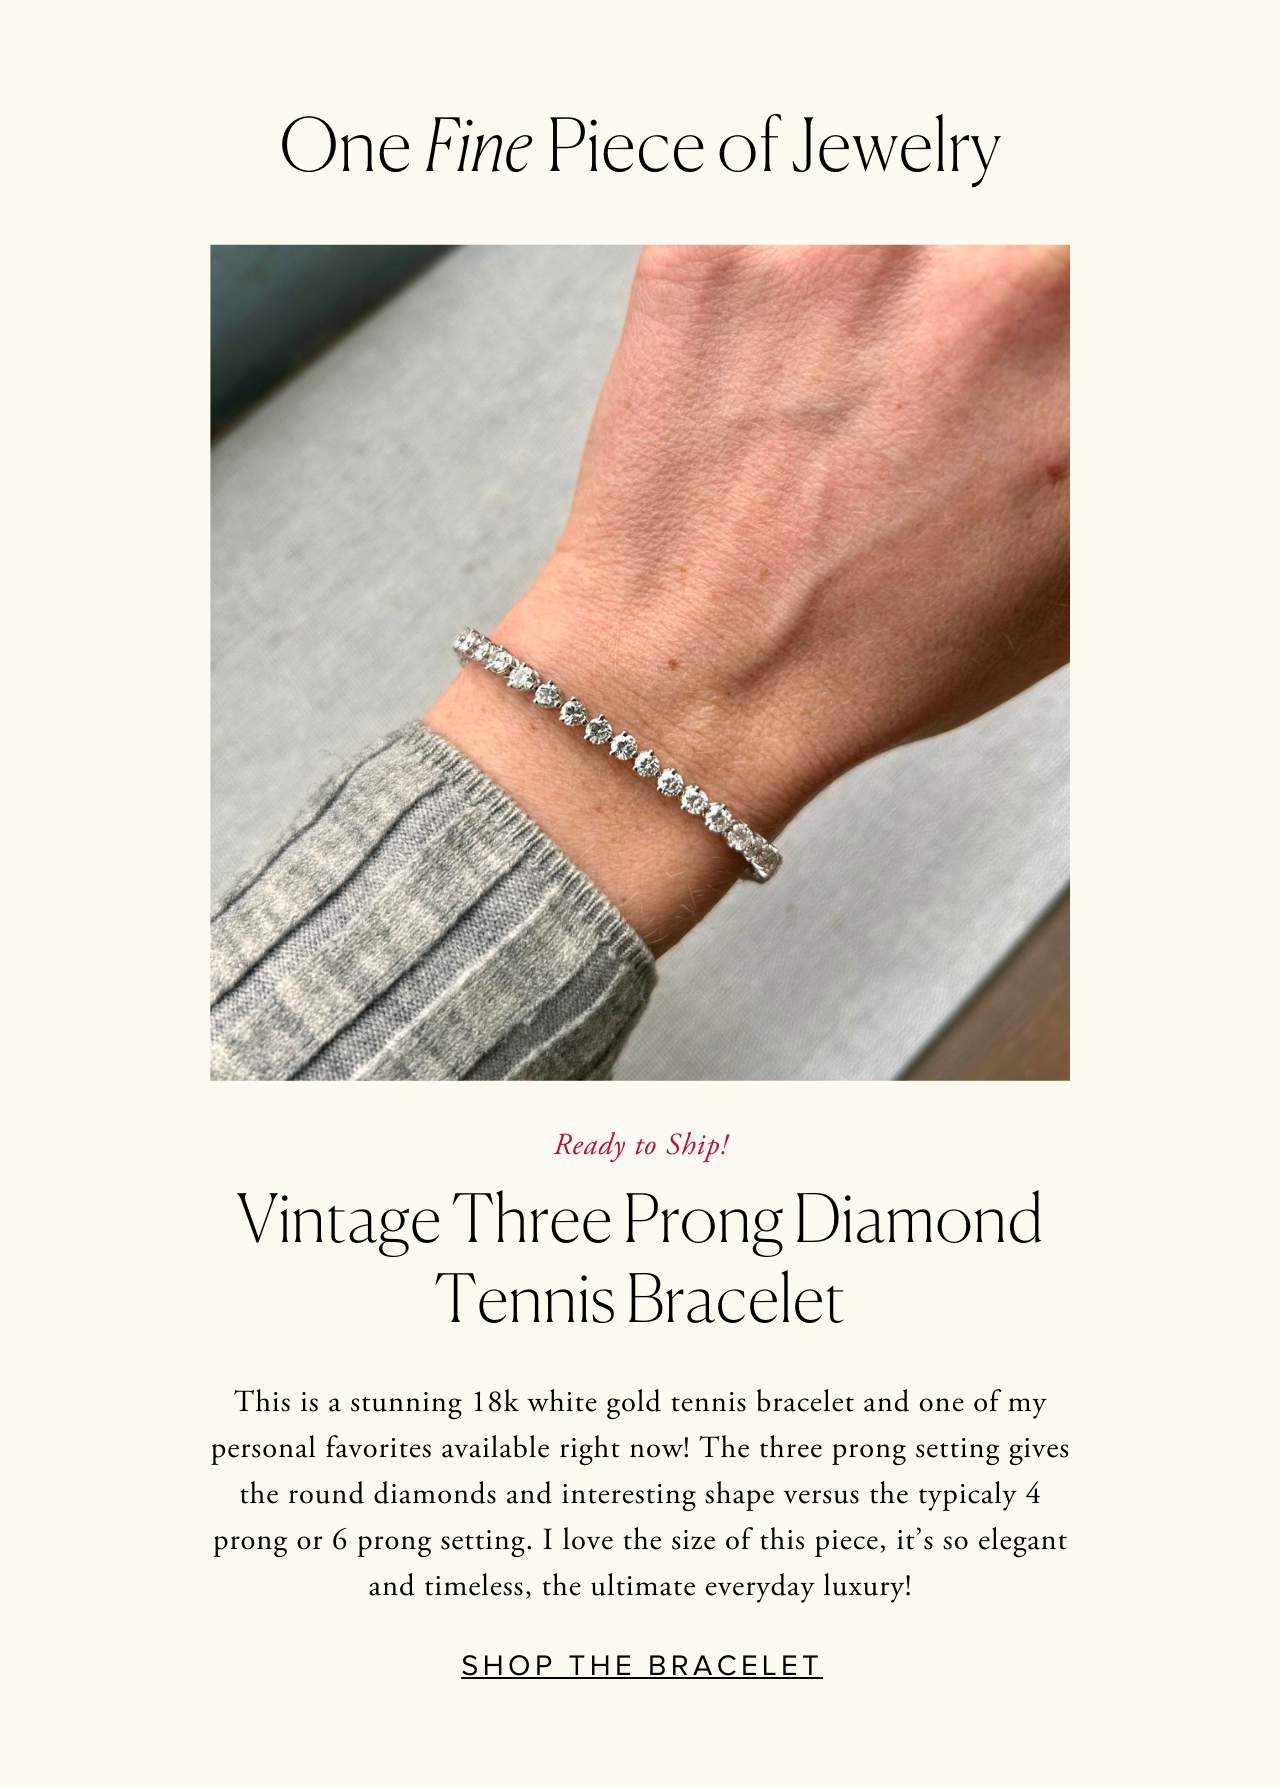 Vintage Three Prong Diamond Tennis Bracelet